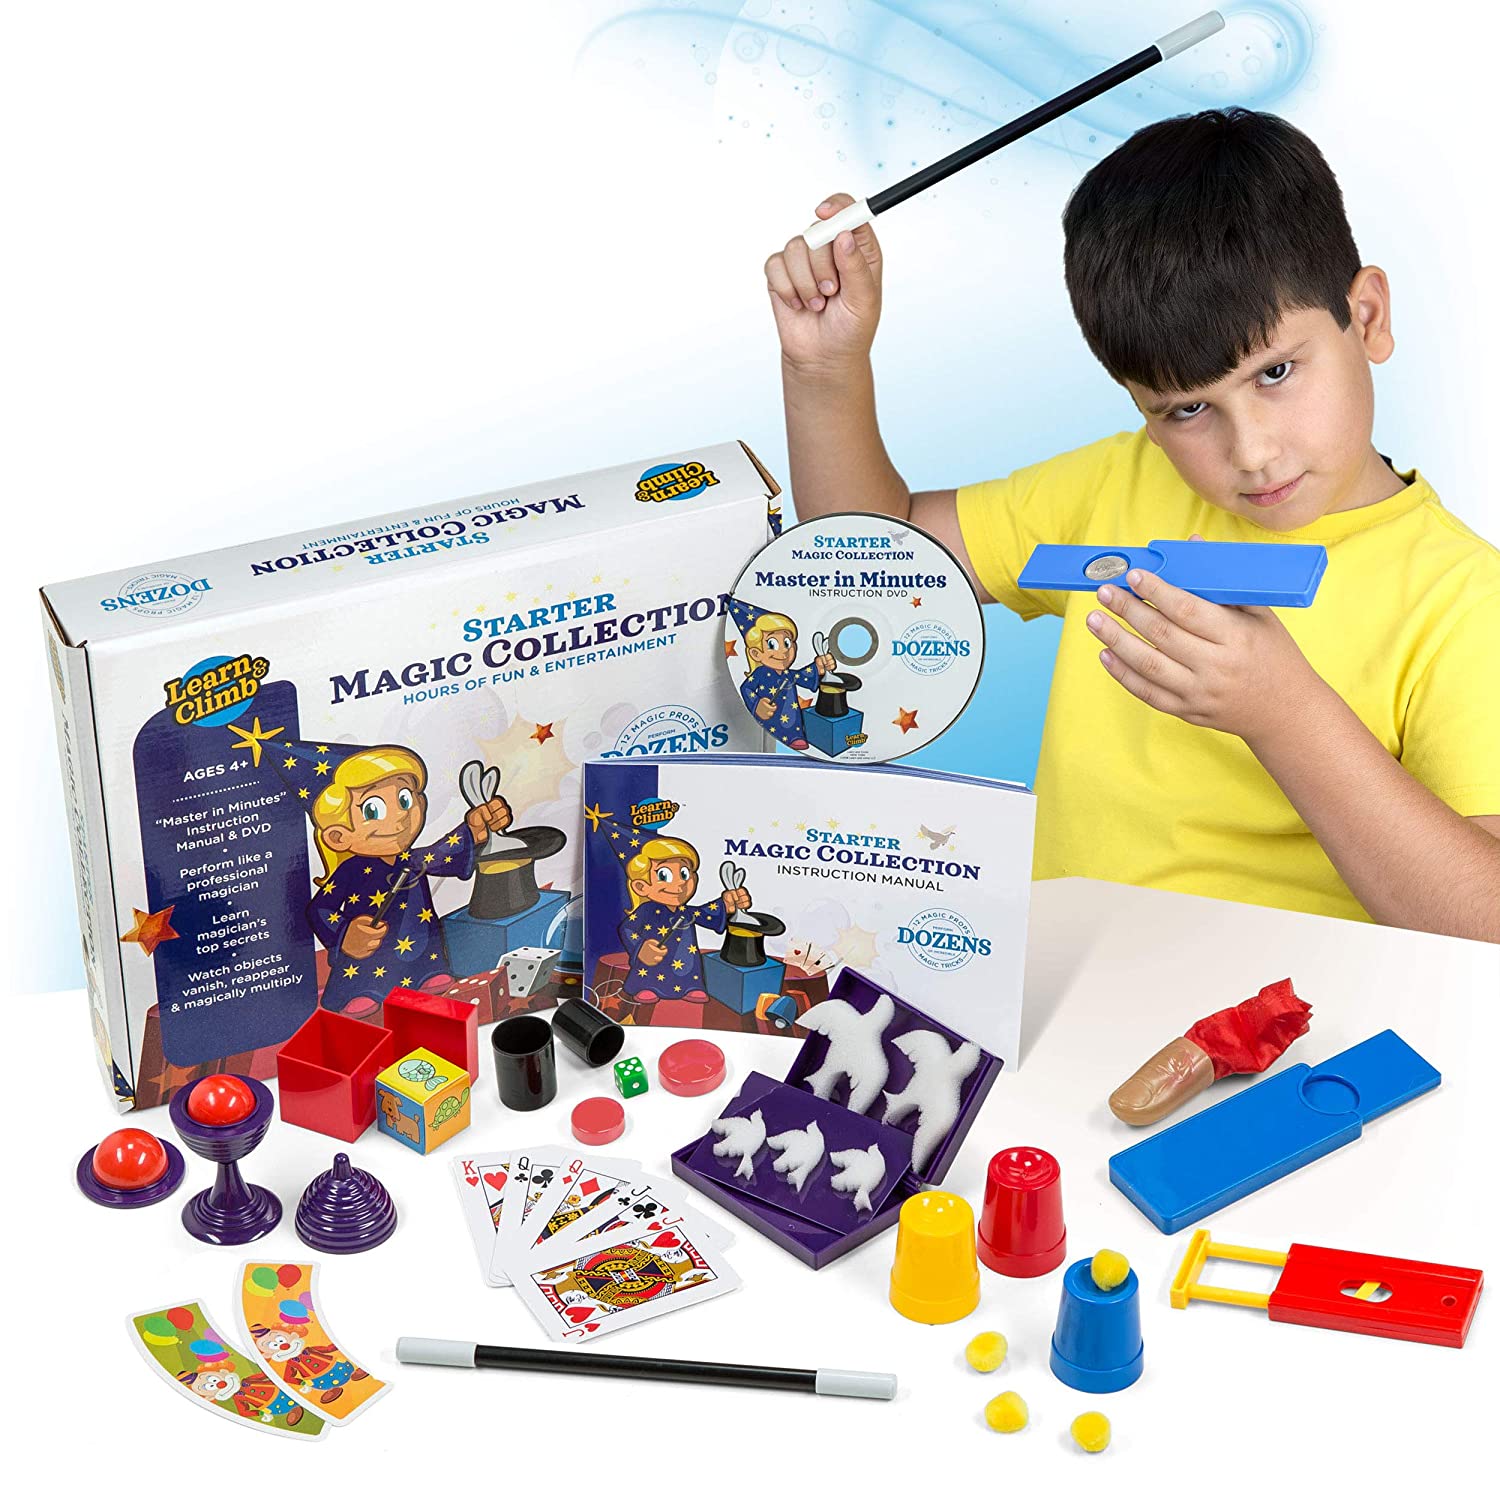 Learn & Climb Beginners Magic kit Set for Kids